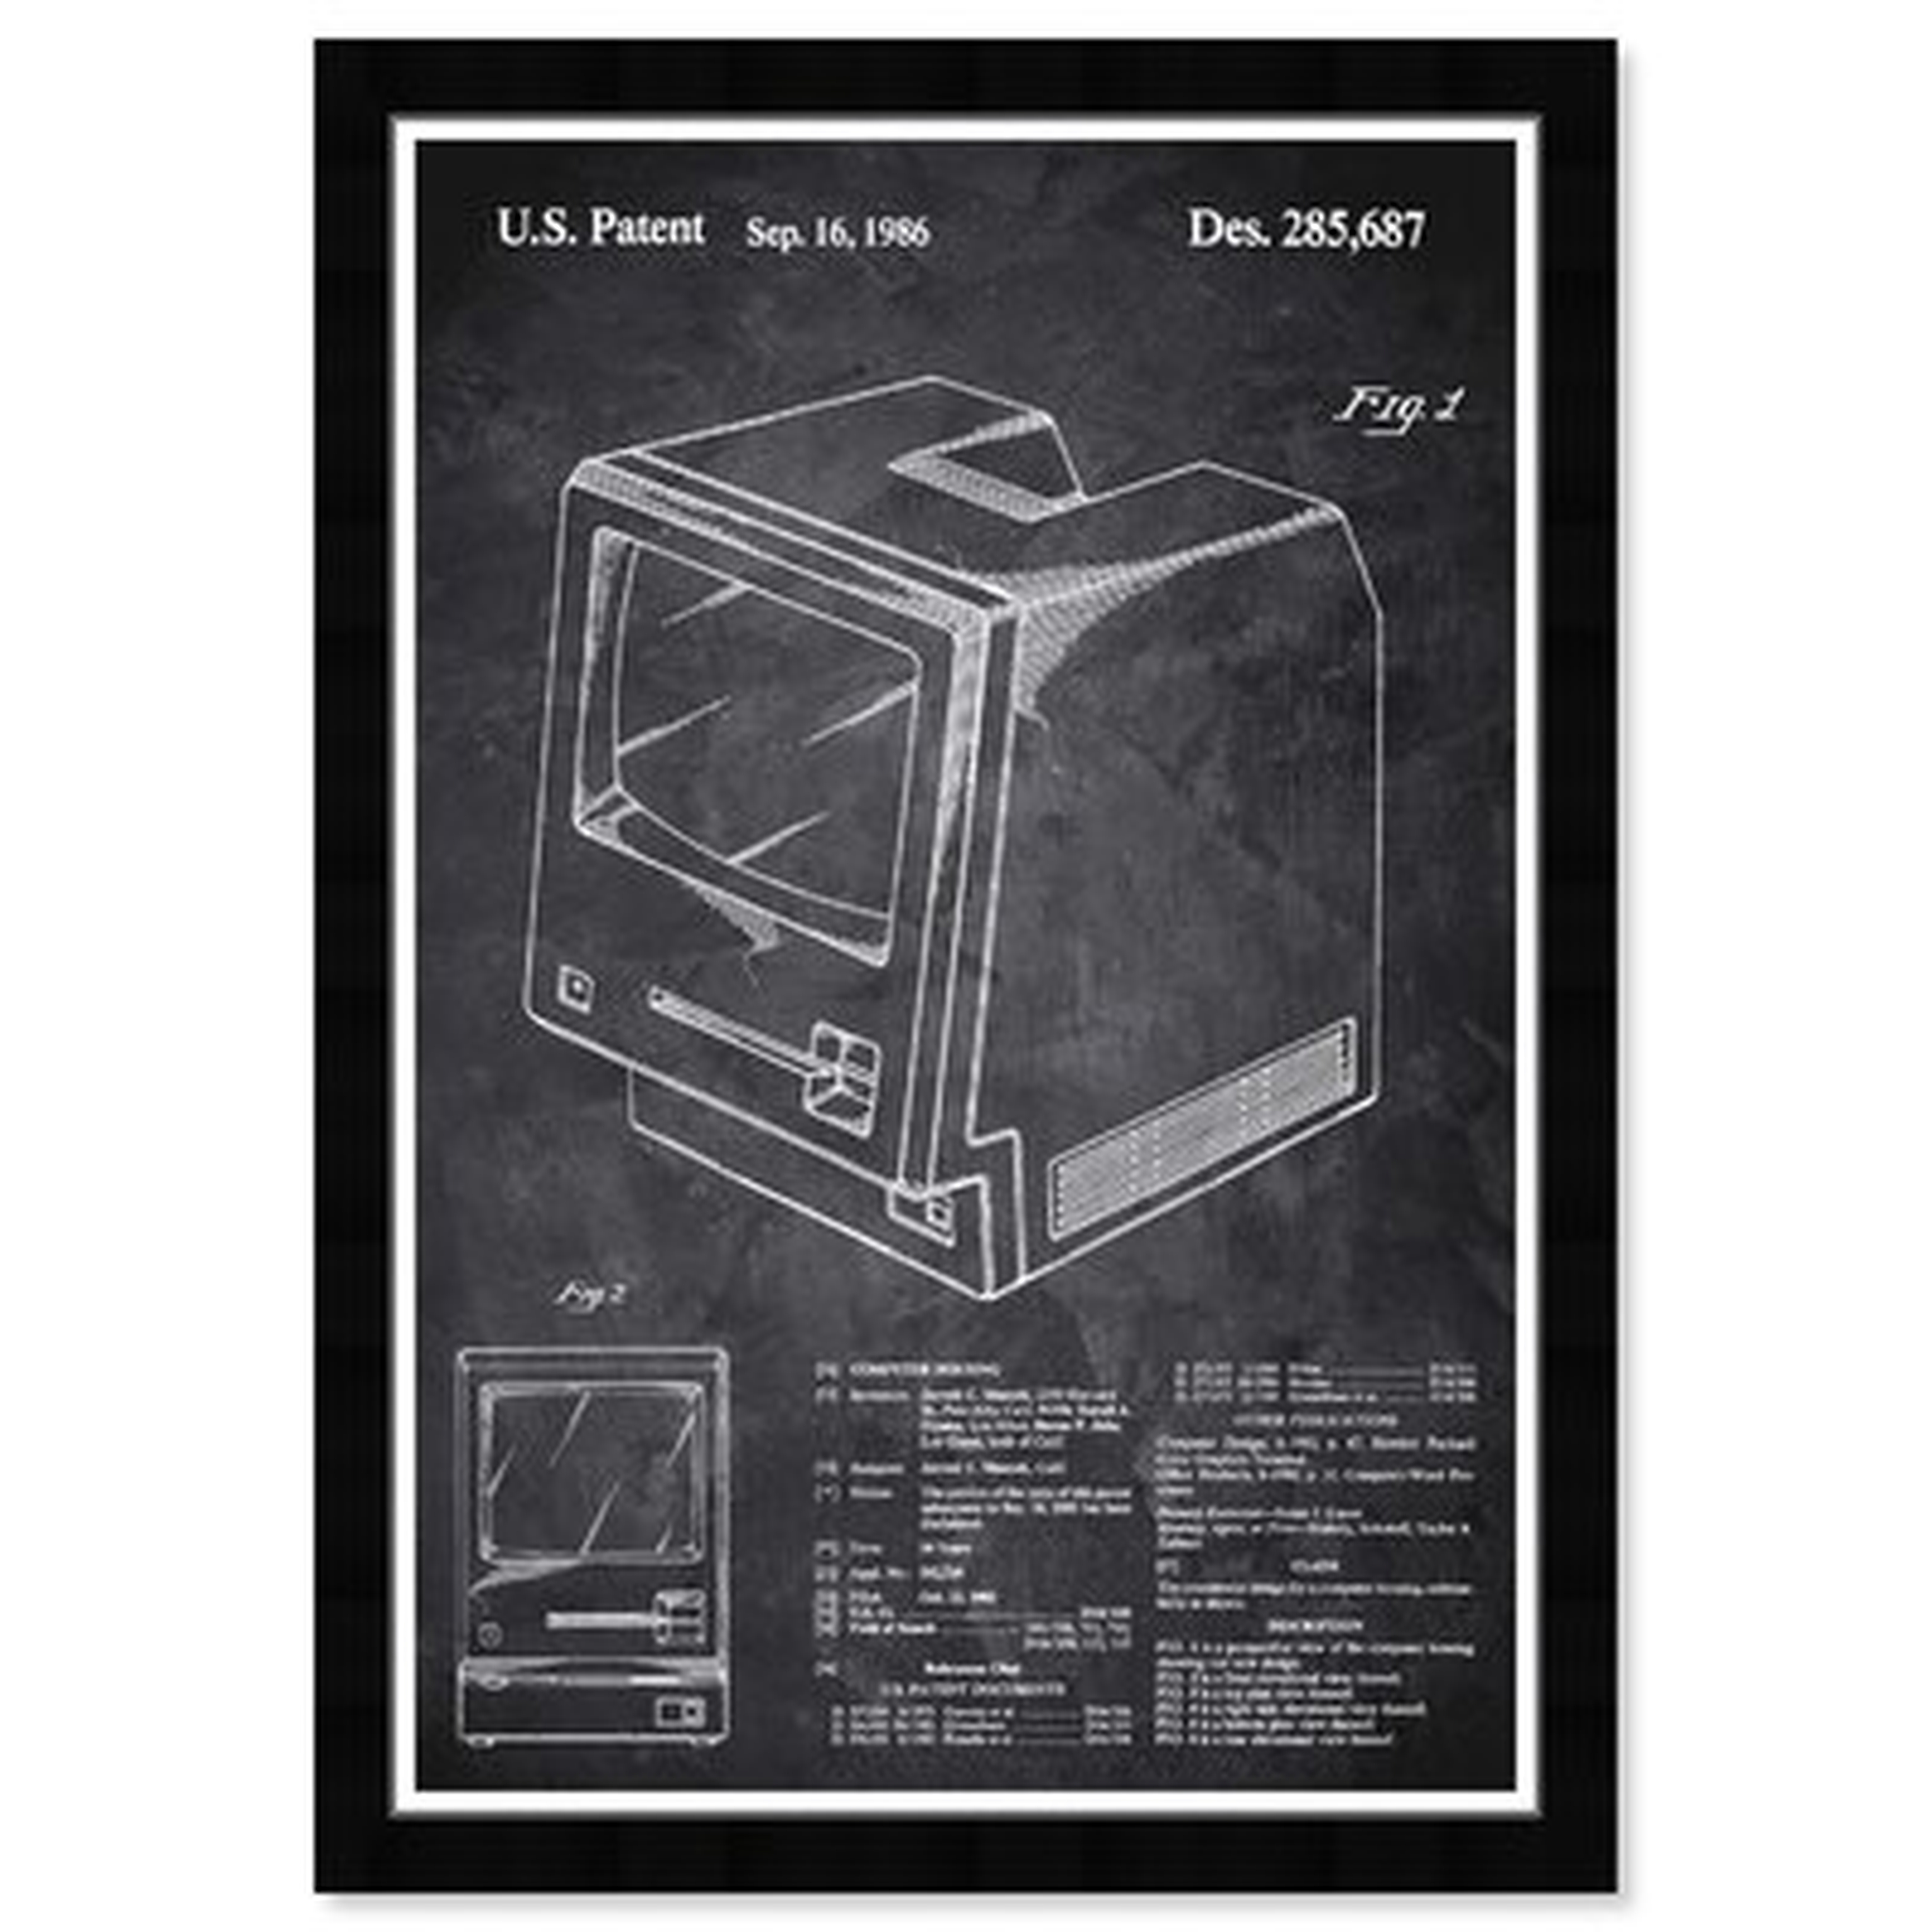 17 Stories Prints 'Entertainment And Hobbies Apple Macintosh 128K 1986 - Noir Chalkboard Video Games' Framed Art Print - Wayfair